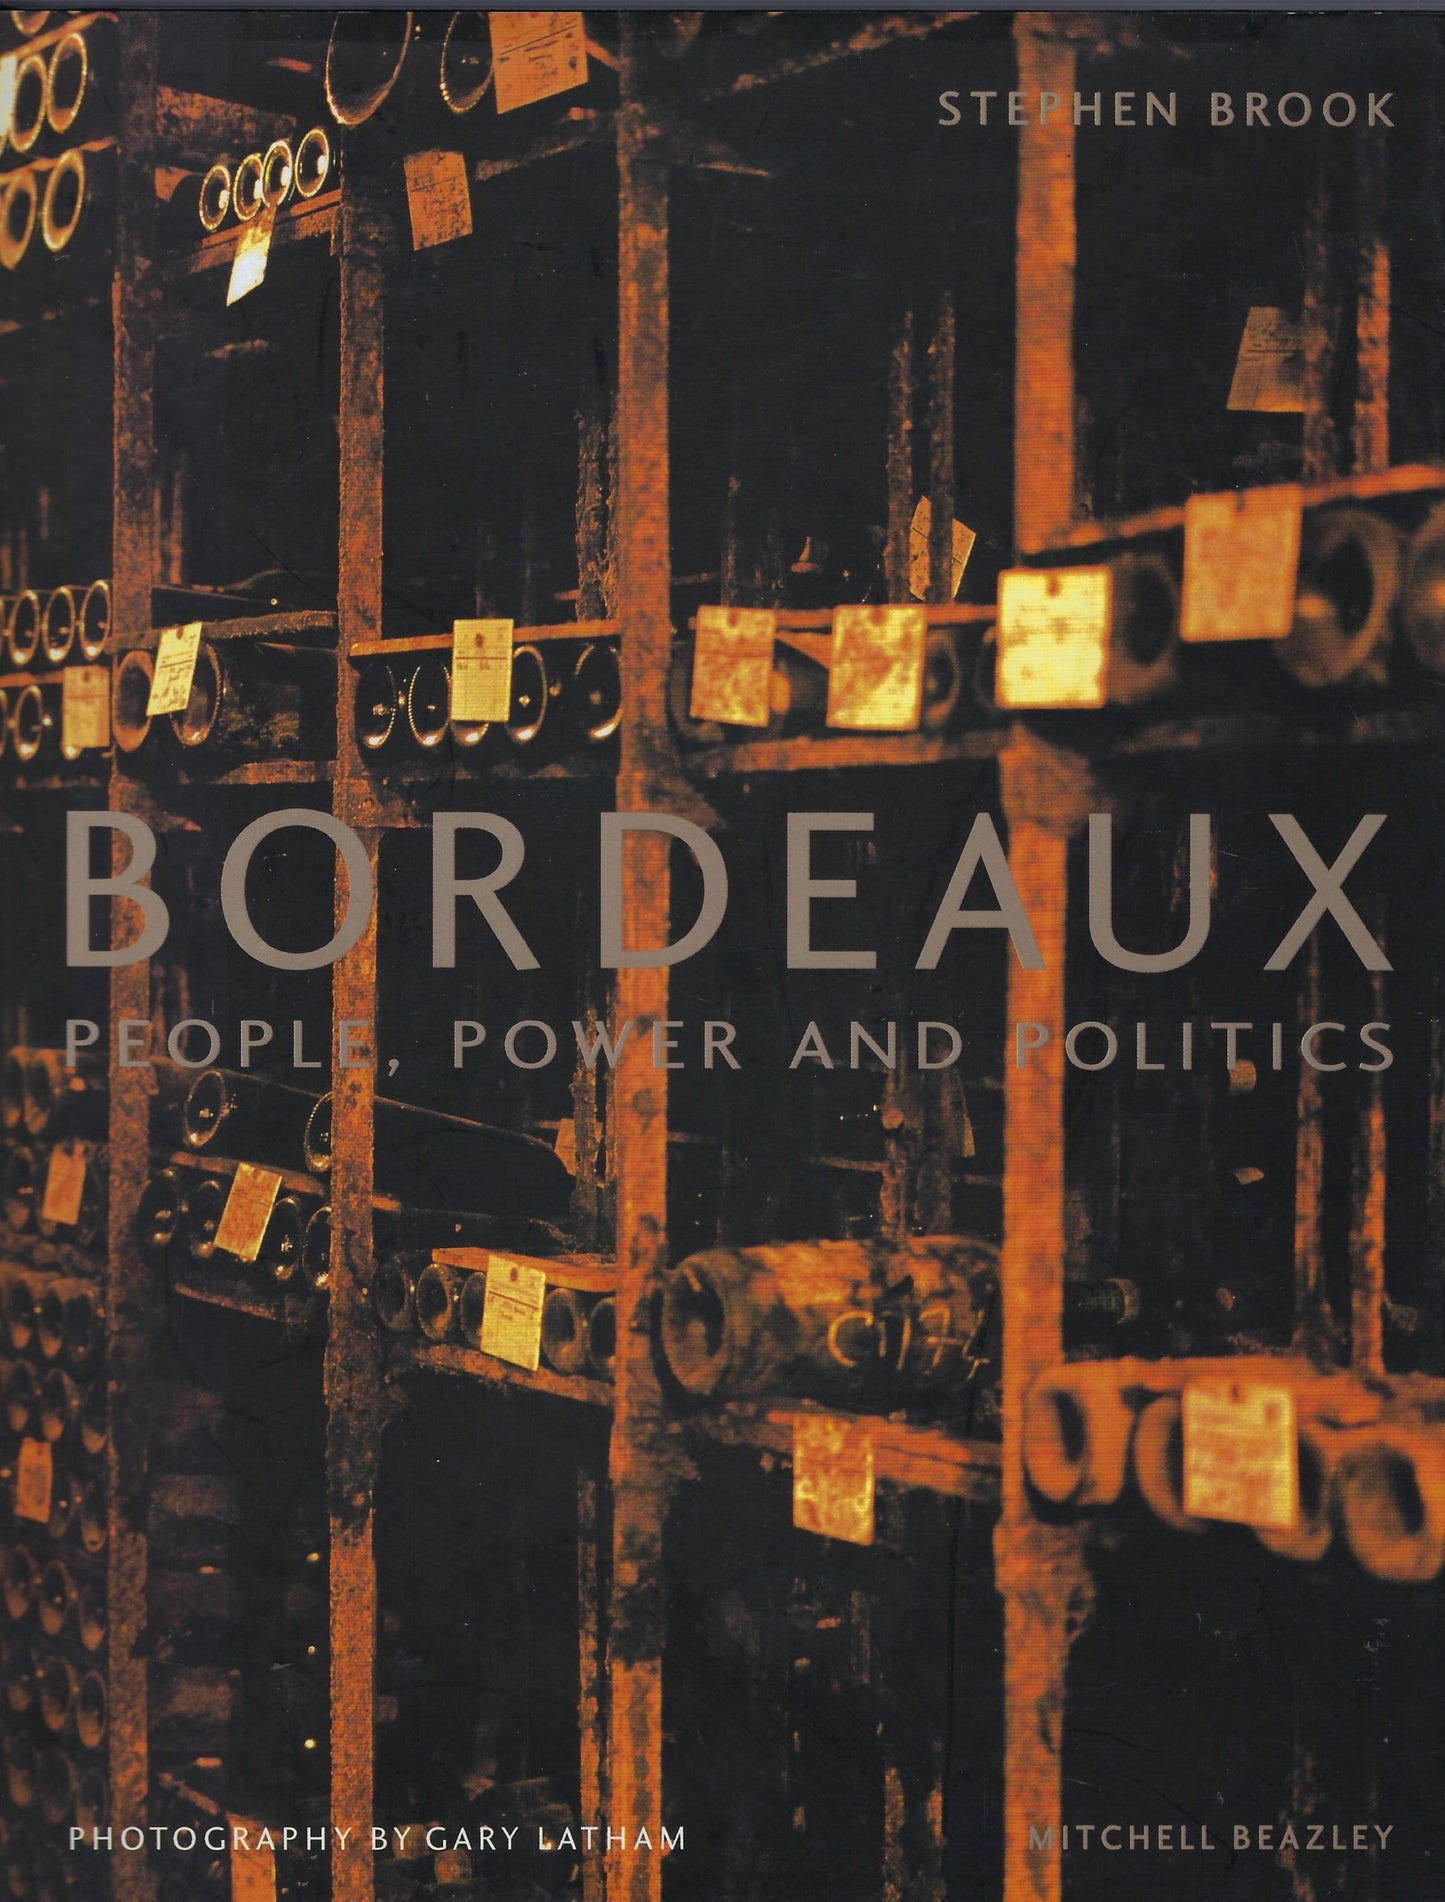 Bordeaux, people, power and politics